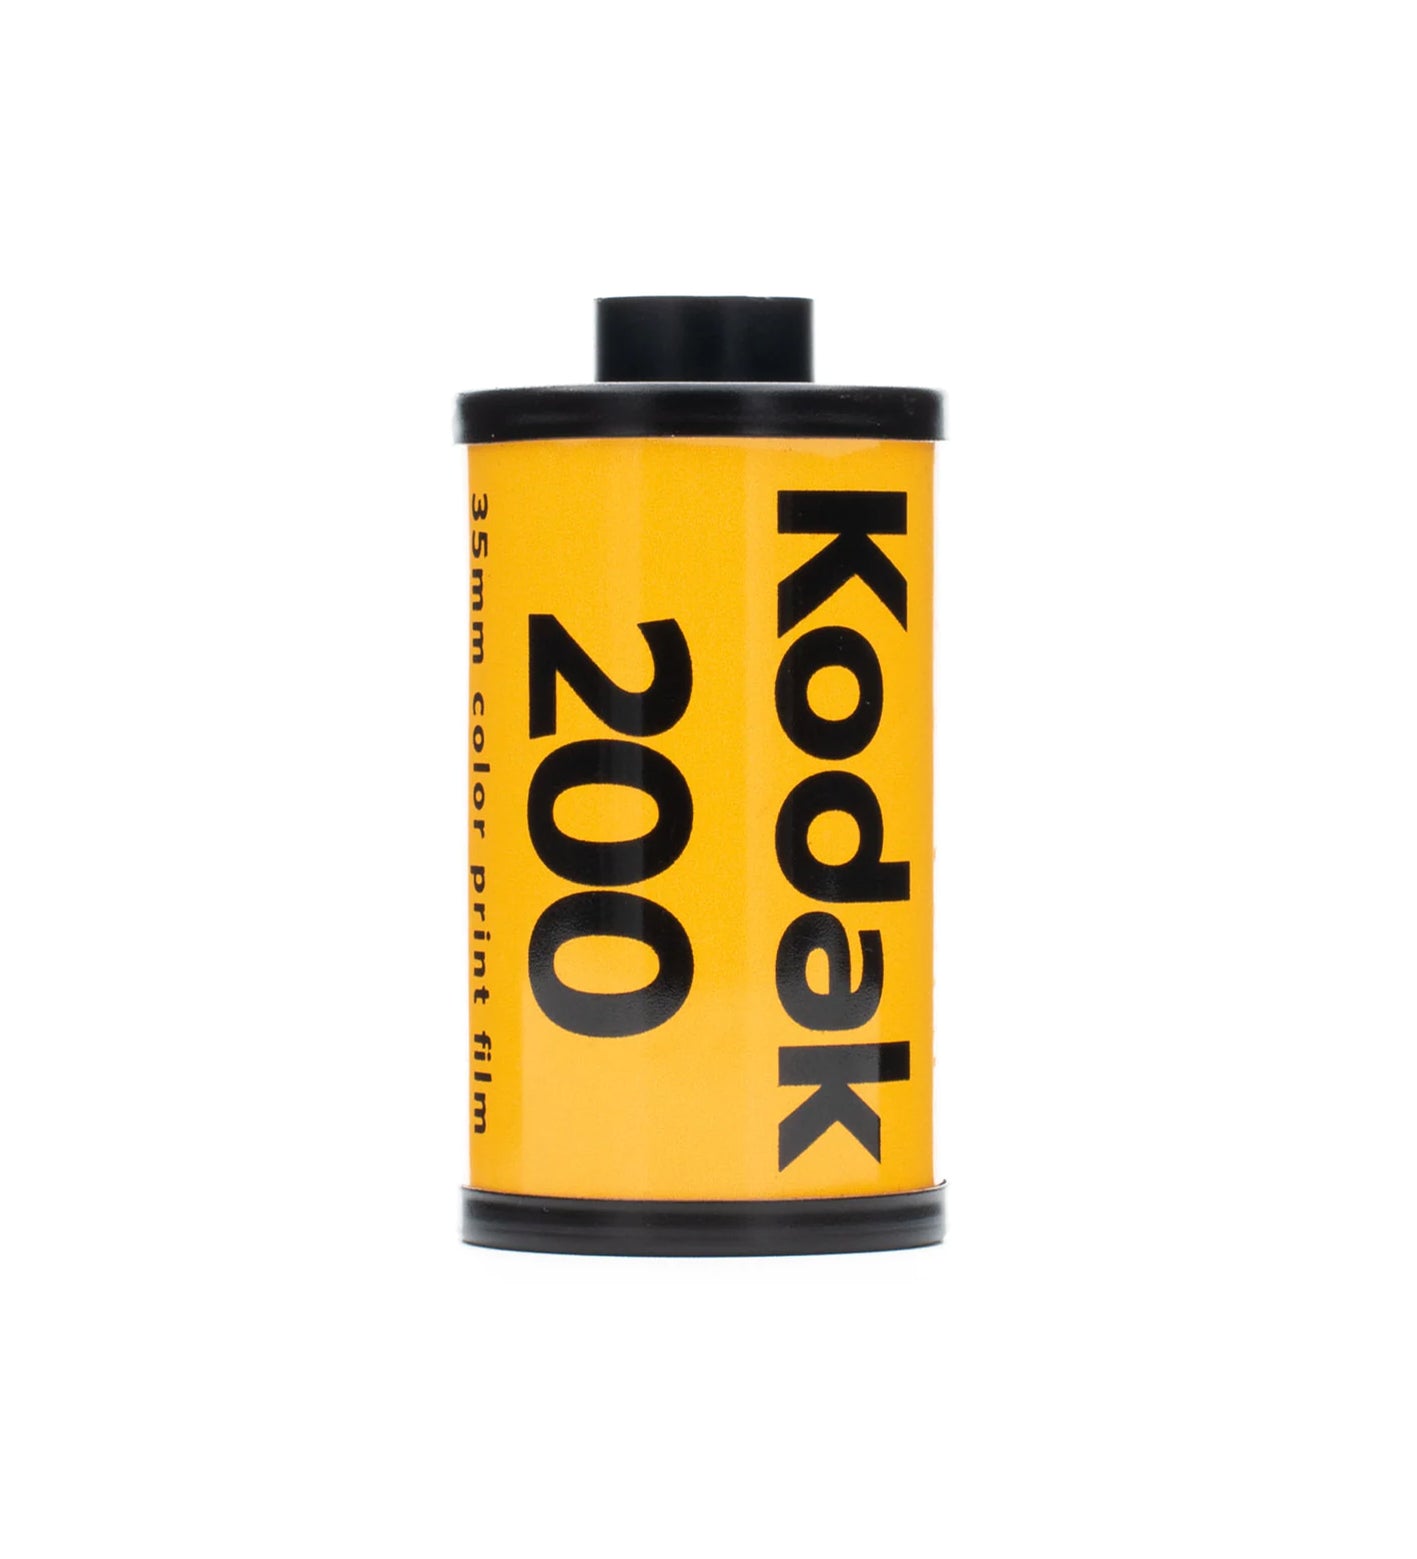 Pack 3 Kodak Gold 200 35mm